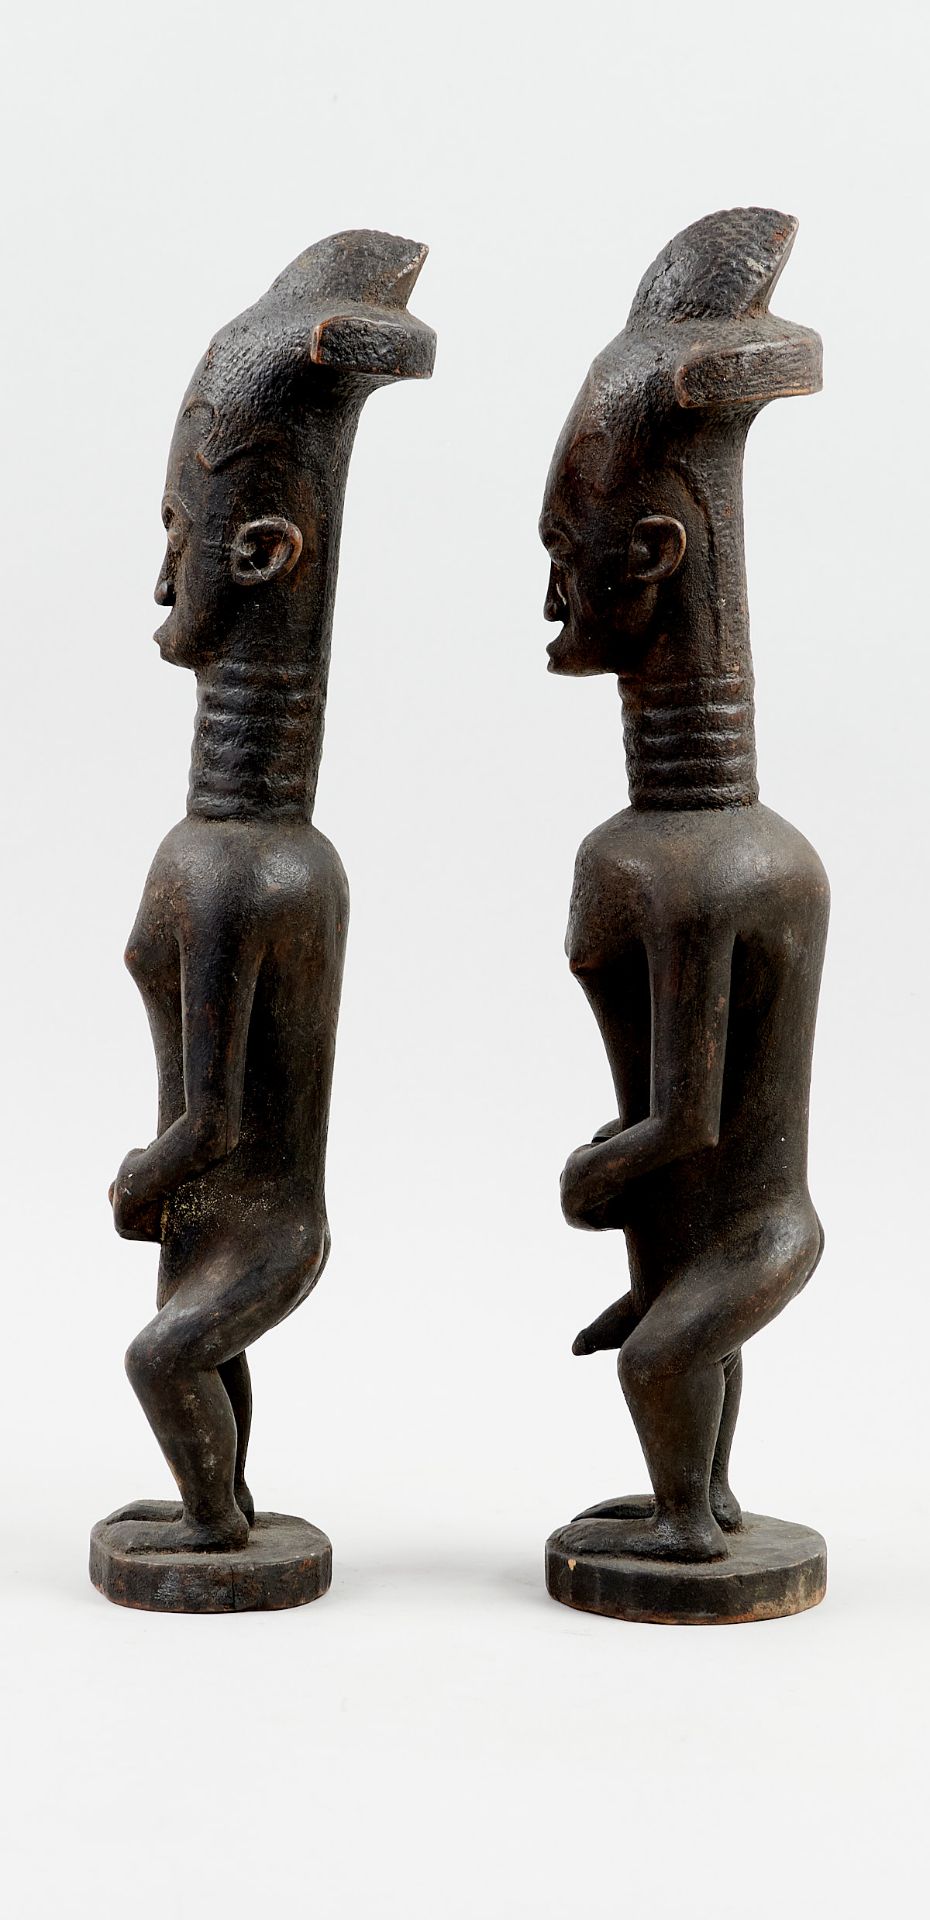 Kunsthandwerk - Afrika - Paar Skulpturen im Kuba-Stil. - Holz, schwarz bemalt. - Image 3 of 3